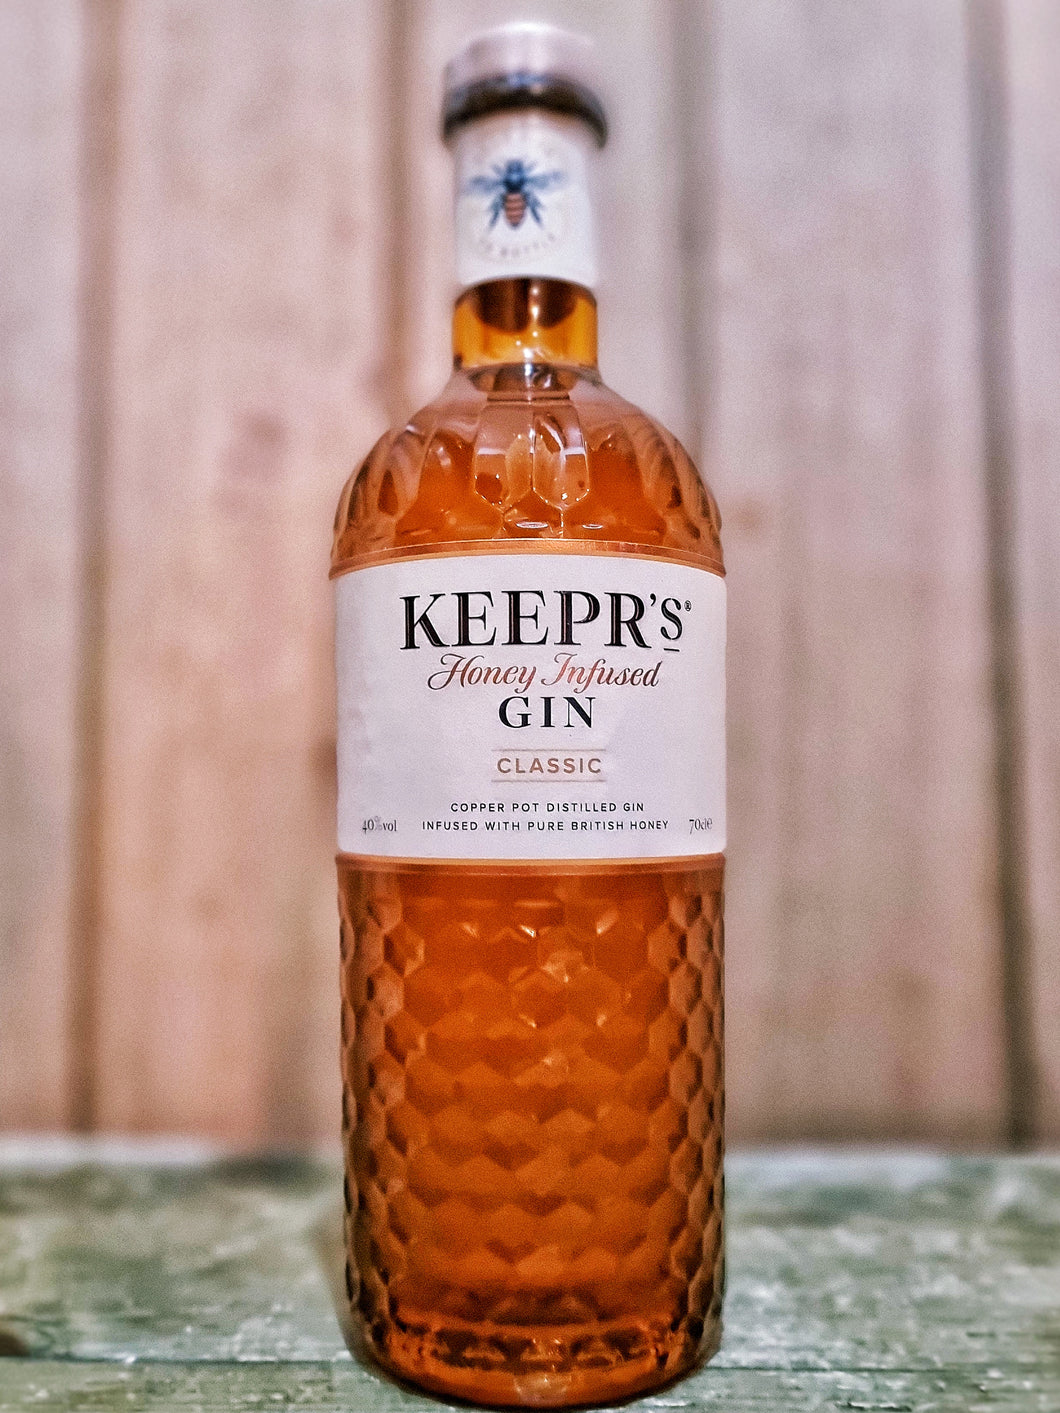 Keeprs - Classic British Honey Infused London Gin